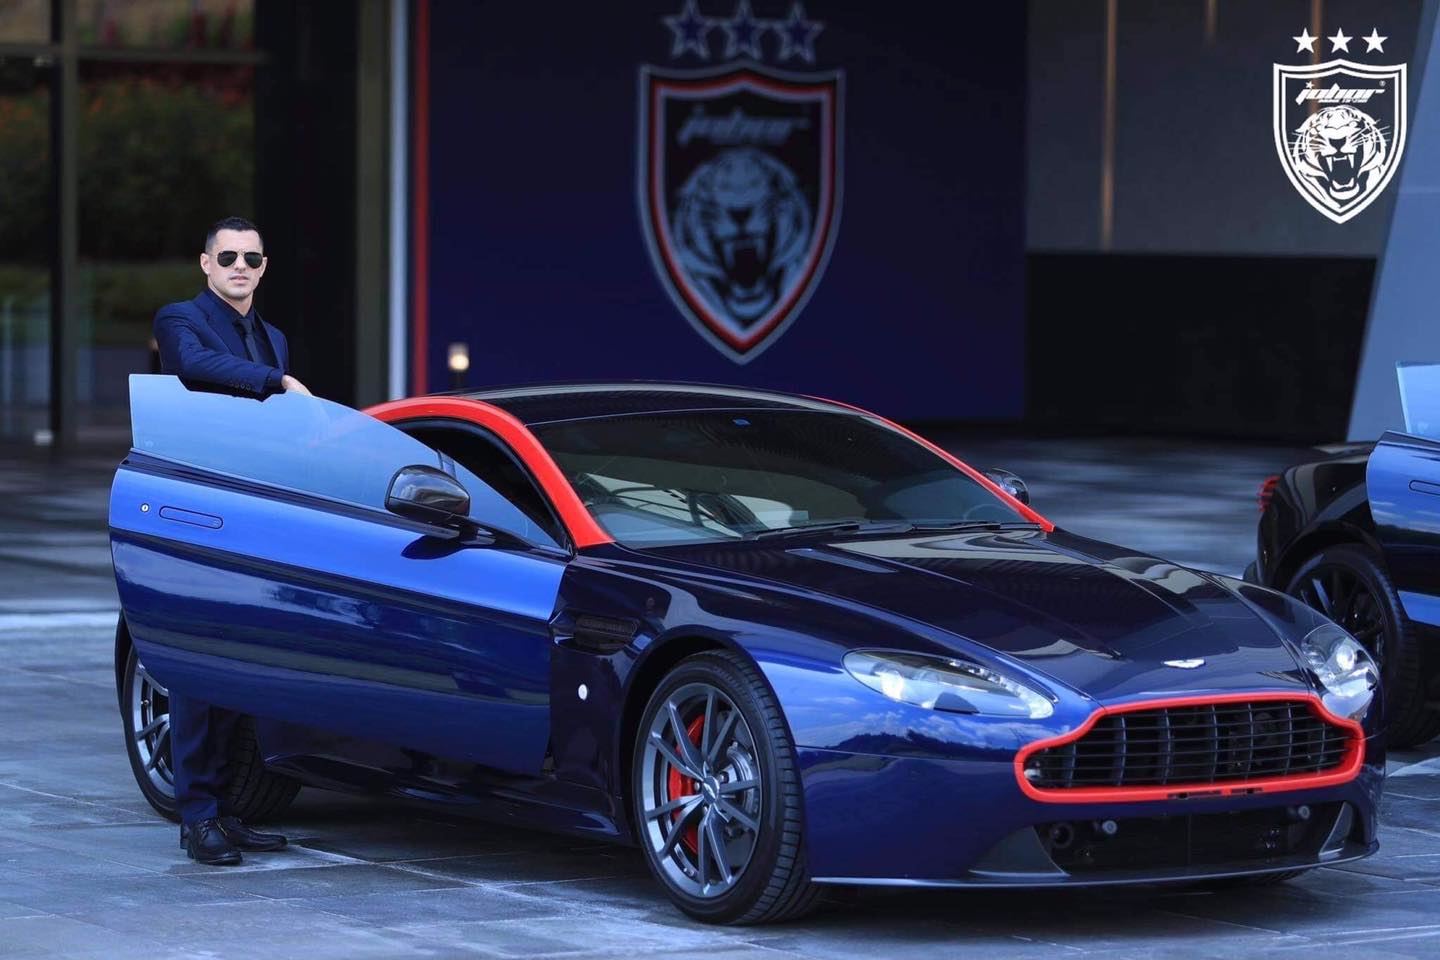 Aston Martin to release special 'JDT Edition' cars for TMJ's Johor Darul  Ta'zim Malaysian football club 